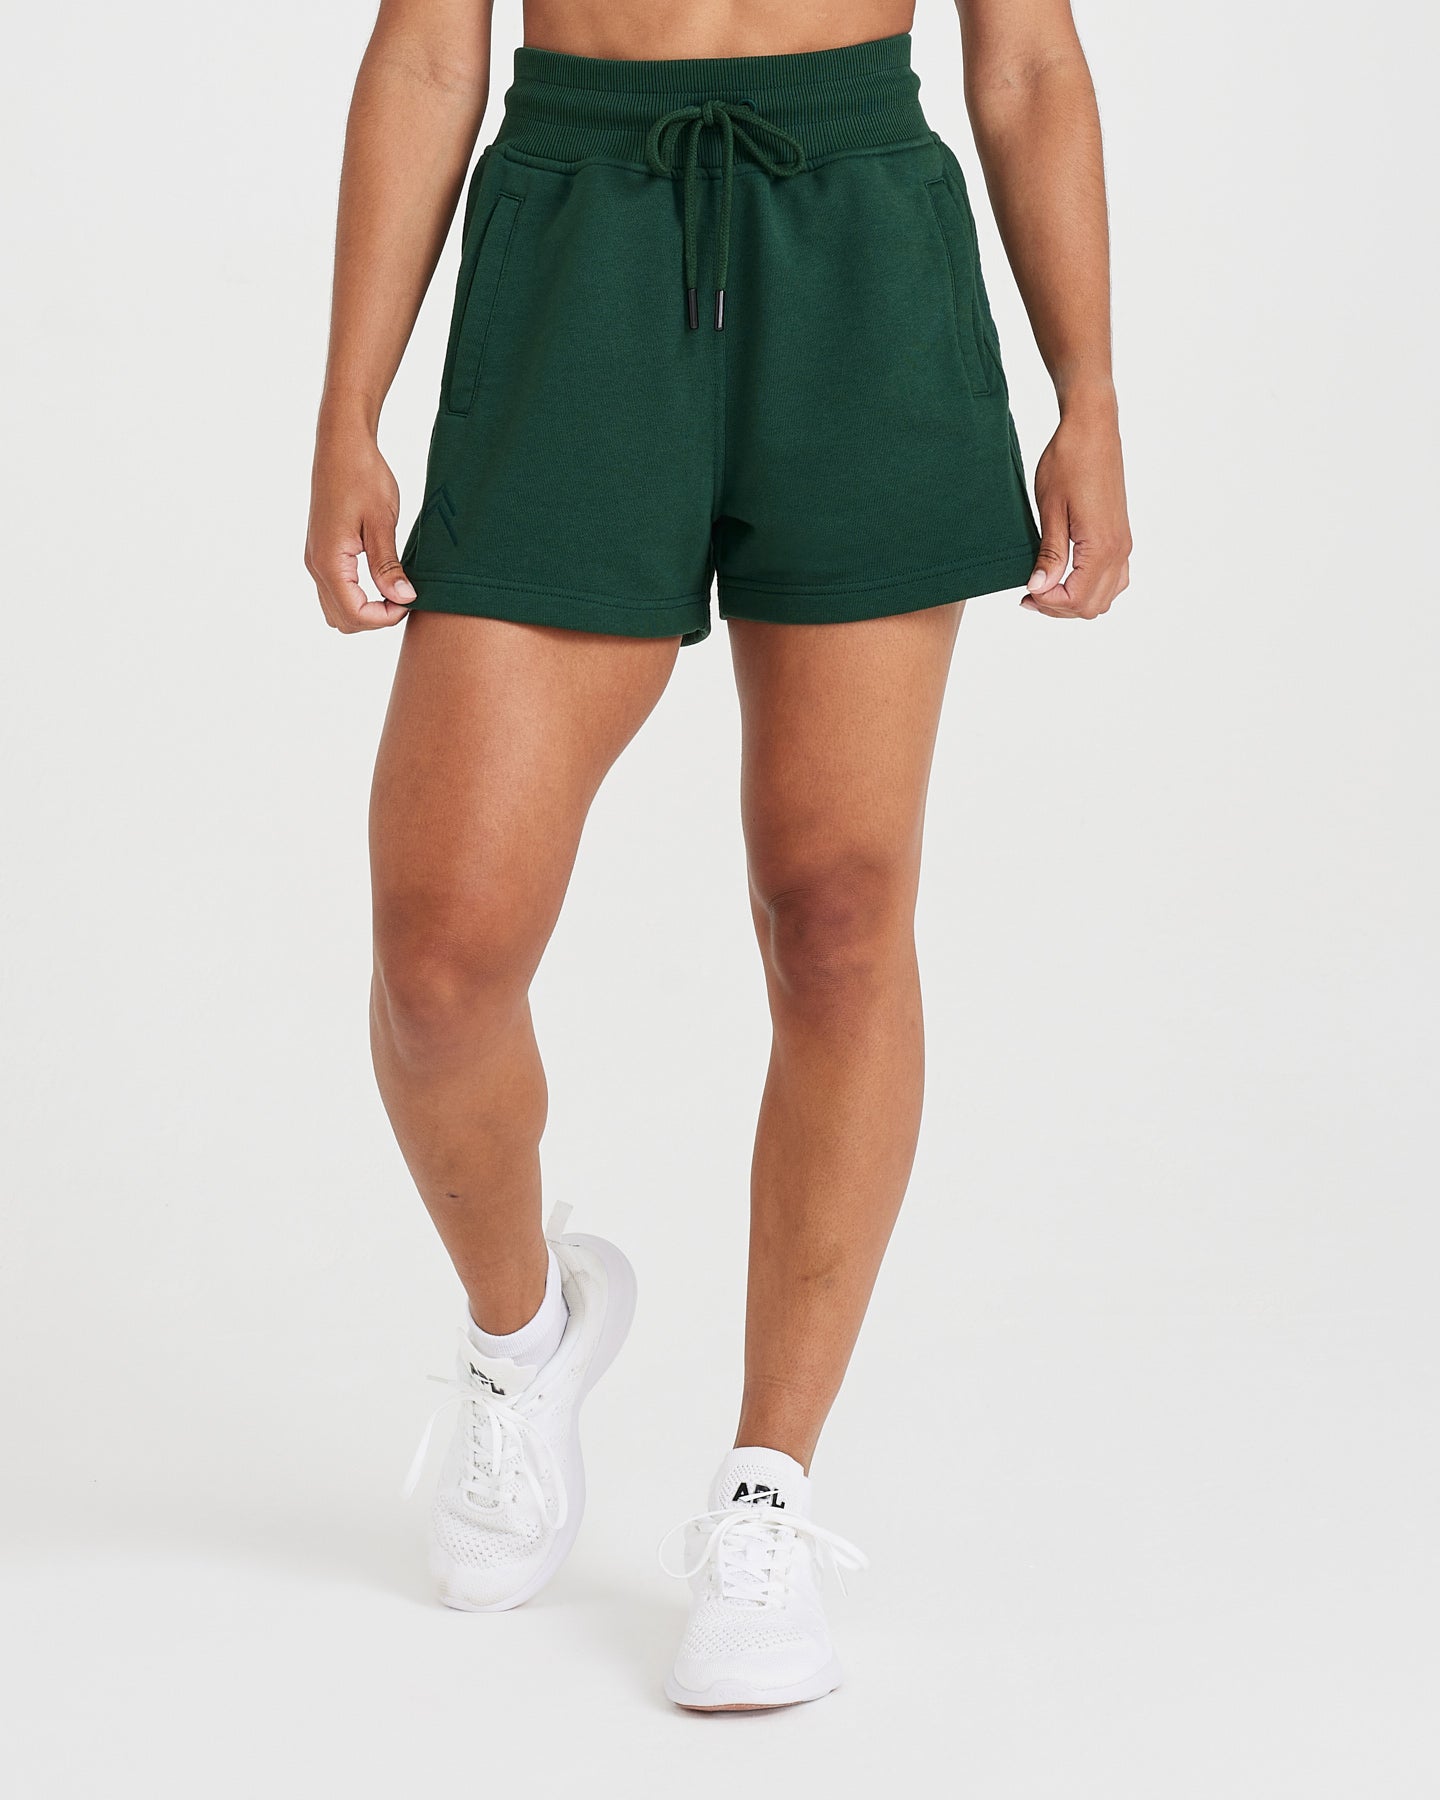 Best Lightweight Shorts for Evergreen - Summer Oner US | Active